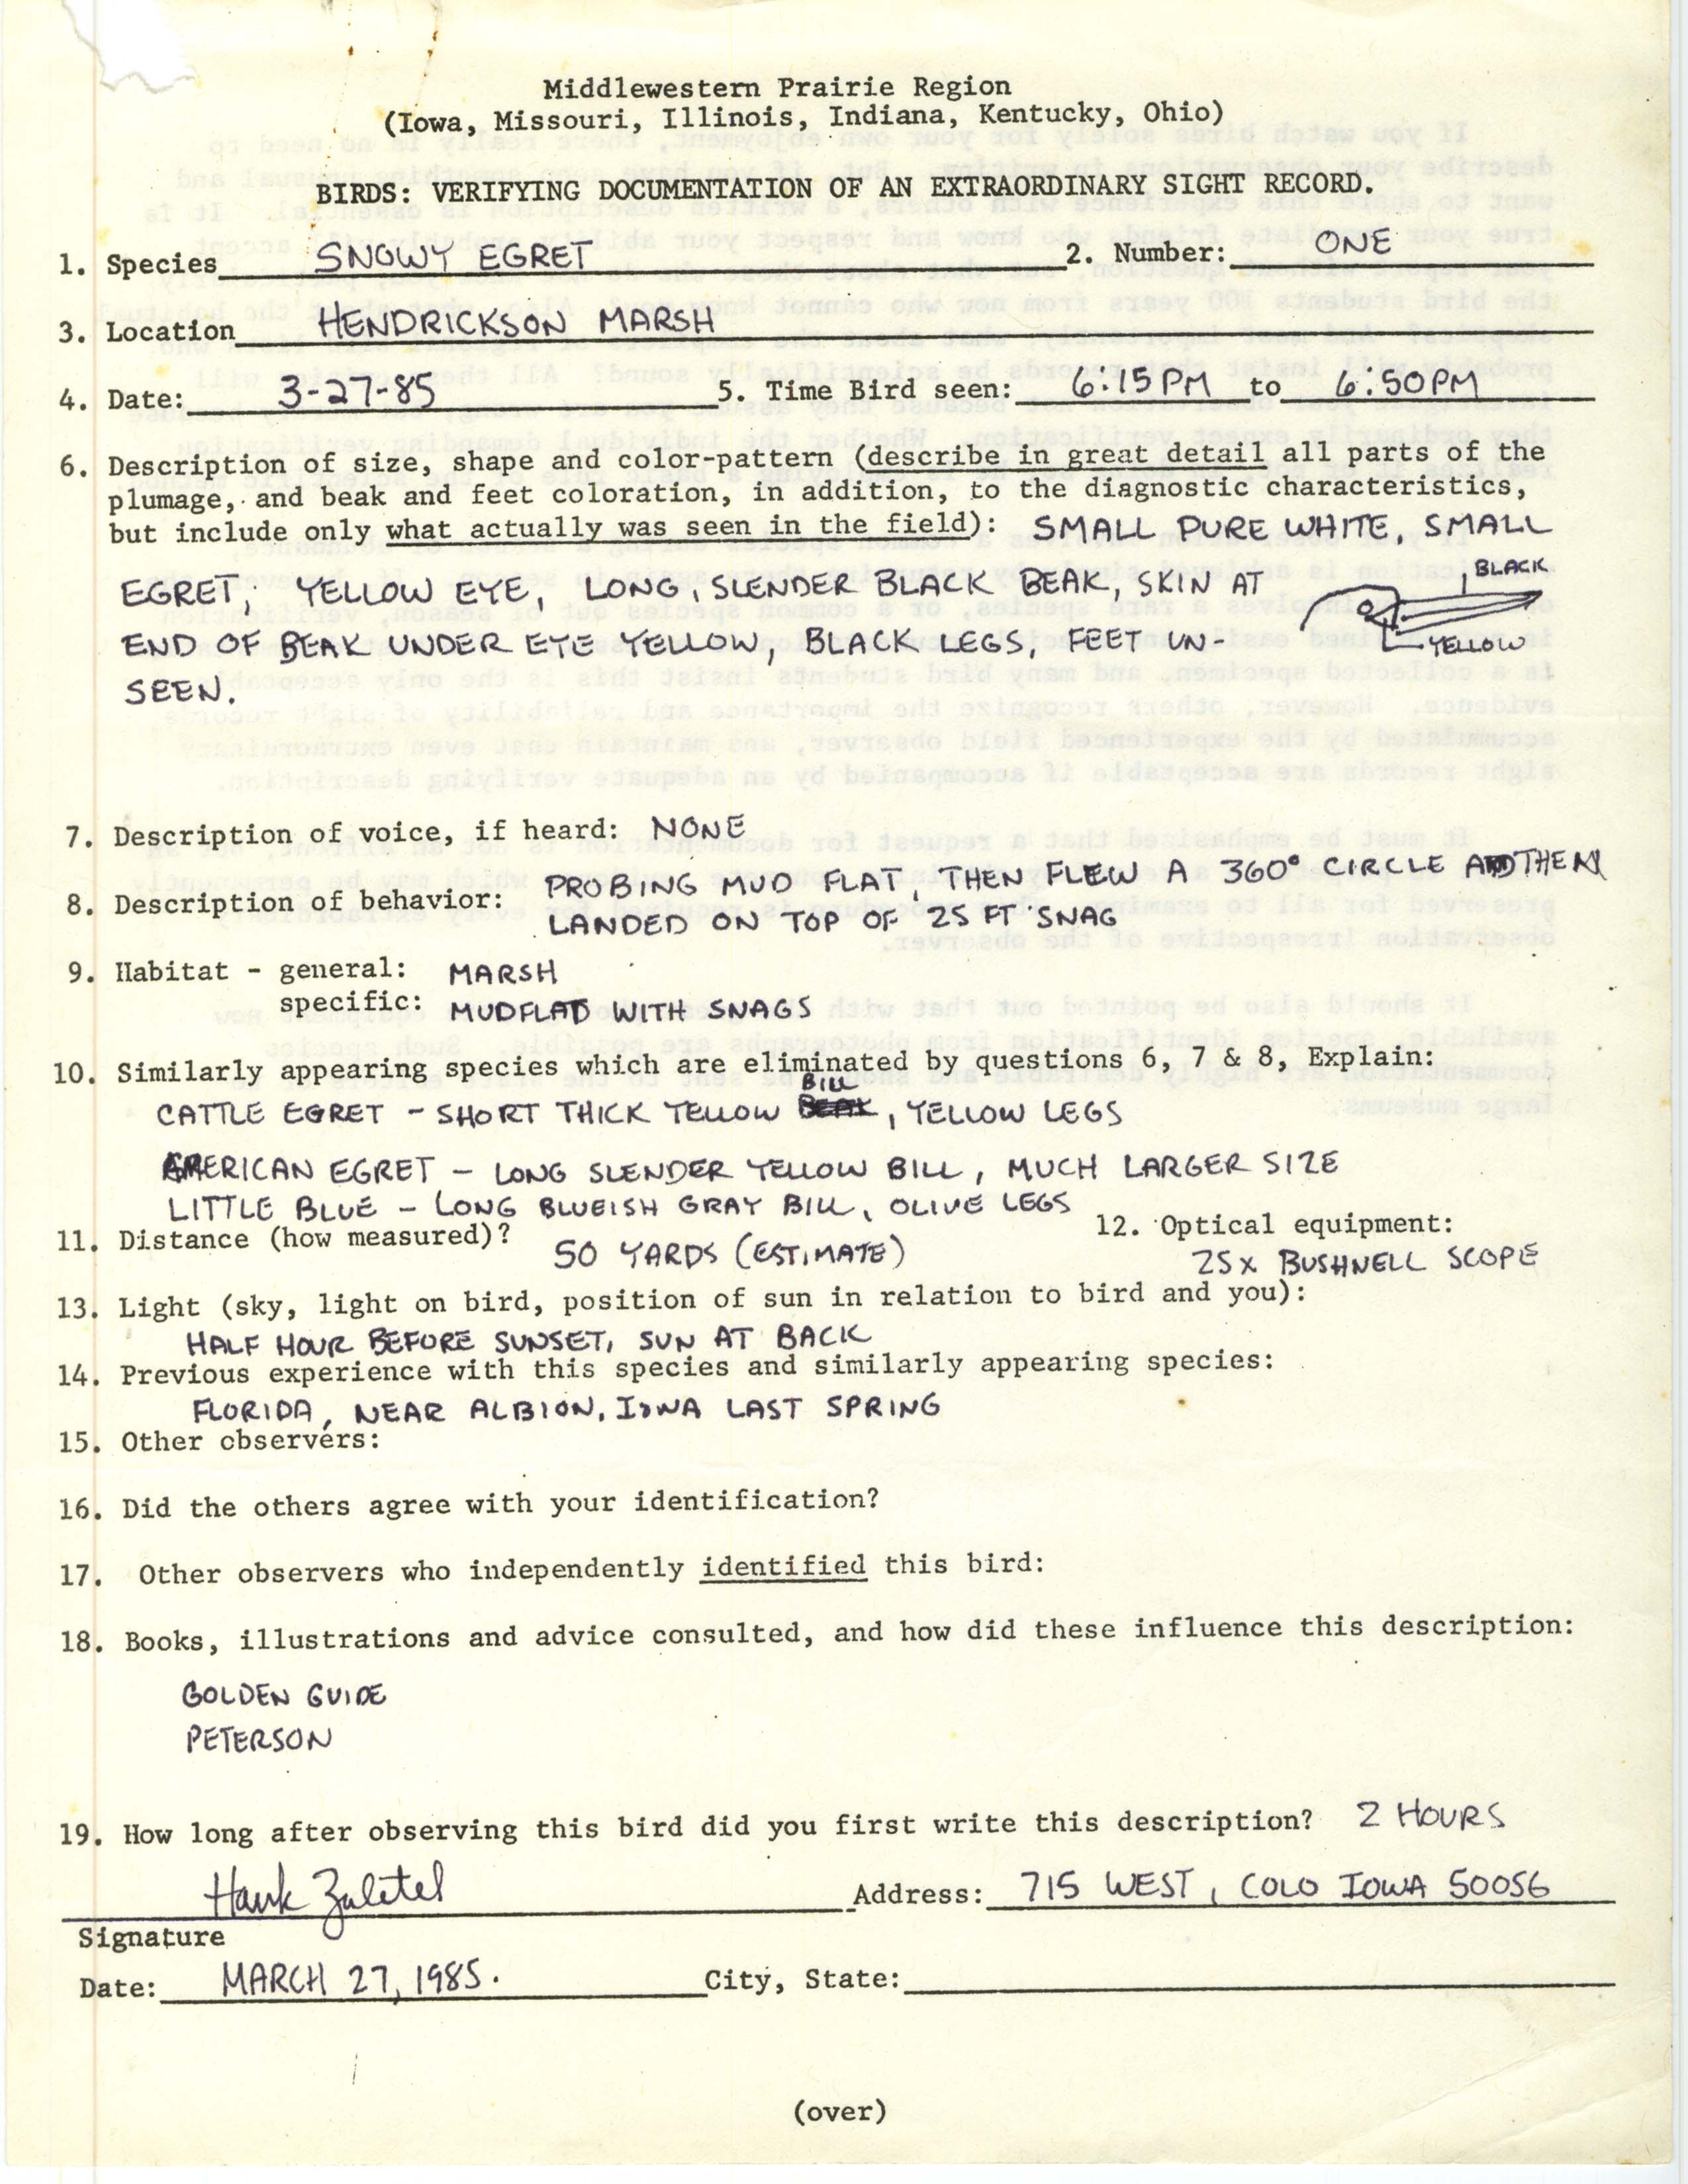 Rare bird documentation form for Snowy Egret at Hendrickson Marsh, 1985